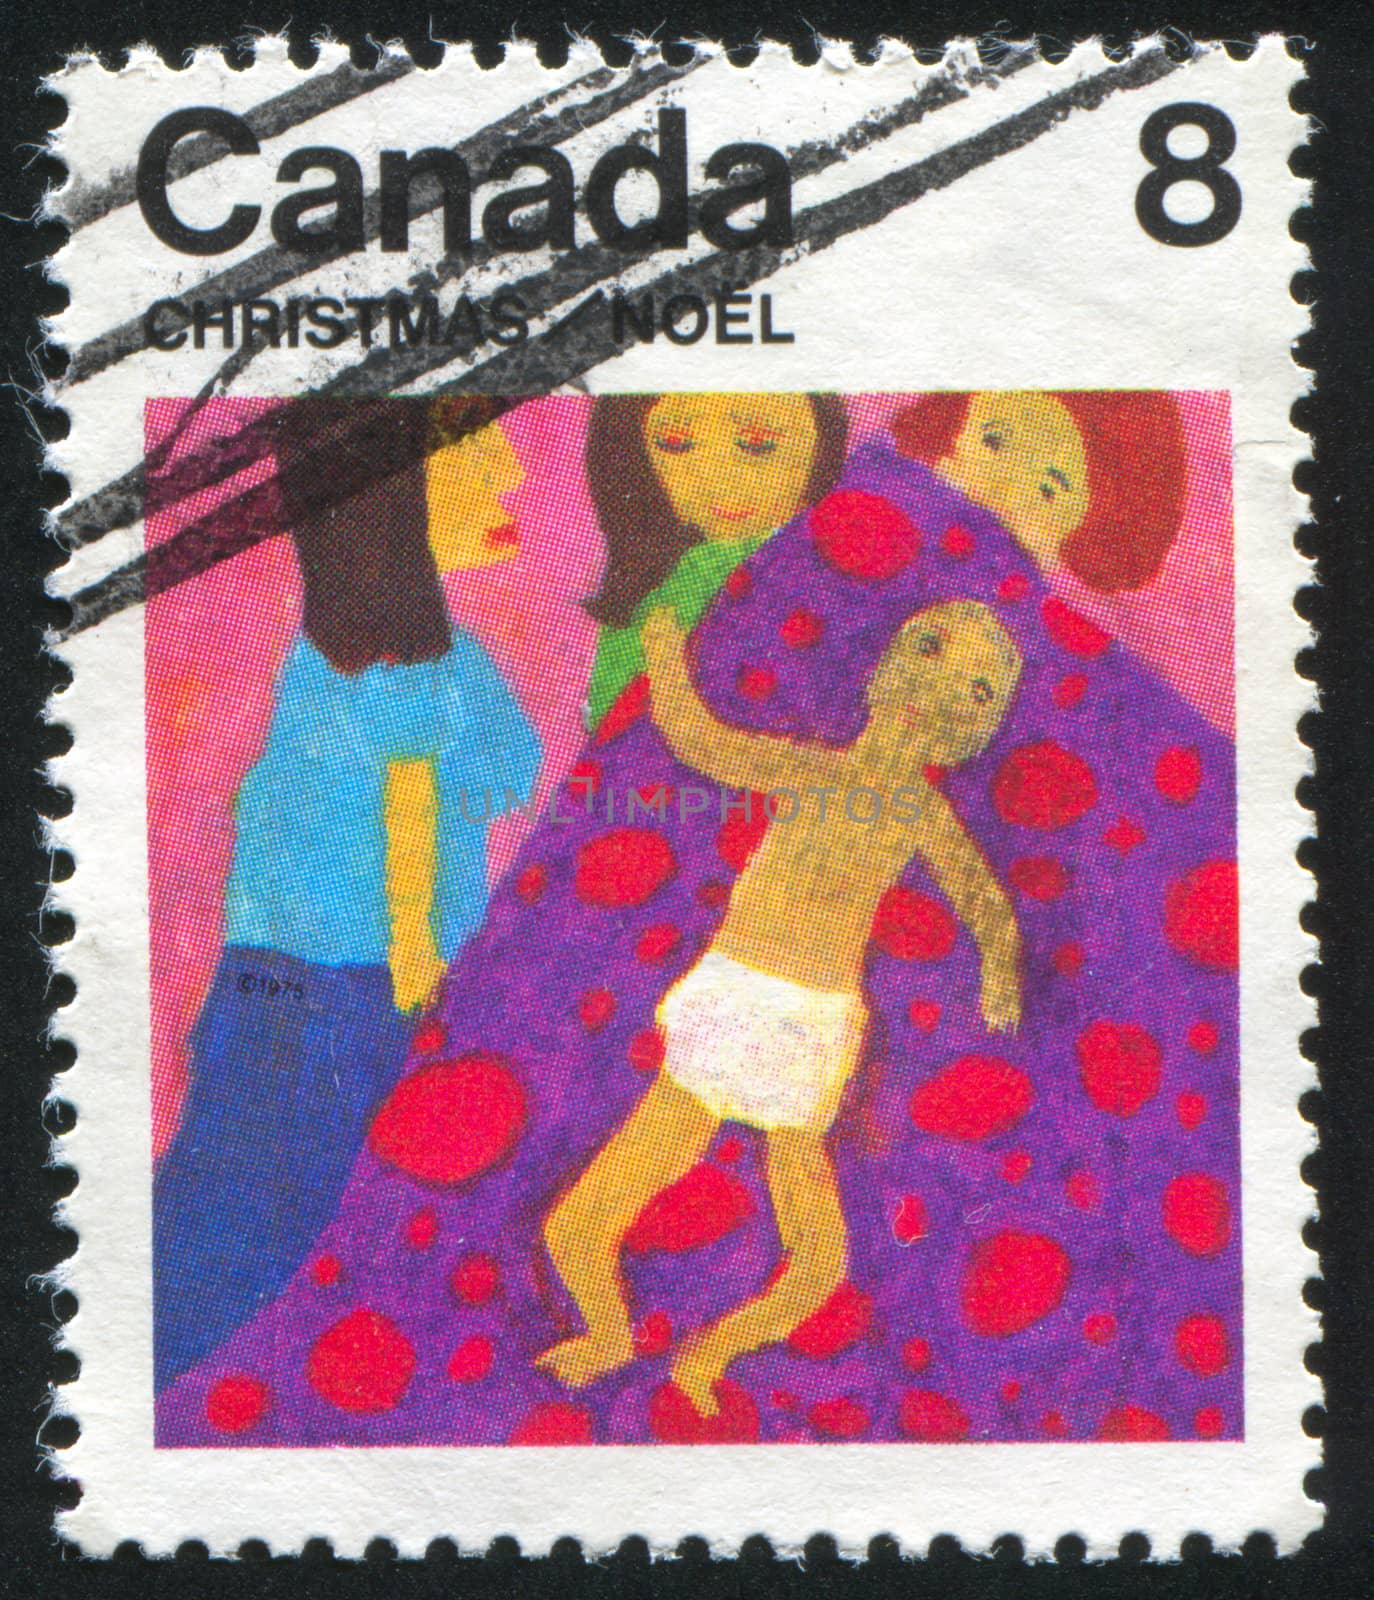 CANADA - CIRCA 1975: stamp printed by Canada, shows Child, circa 1975